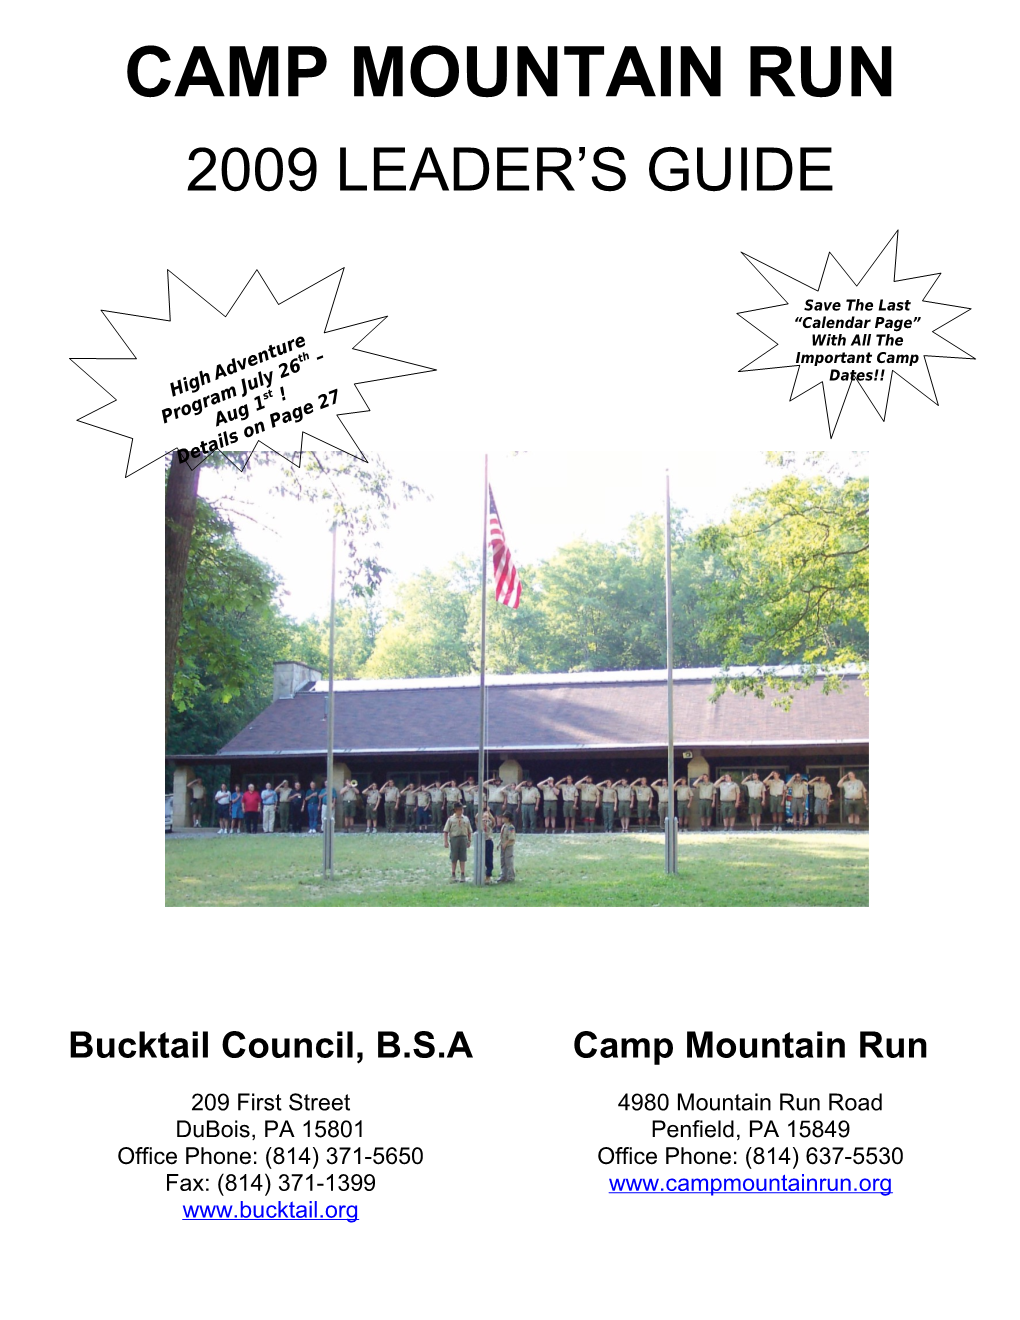 2003 Camp Mountain Run